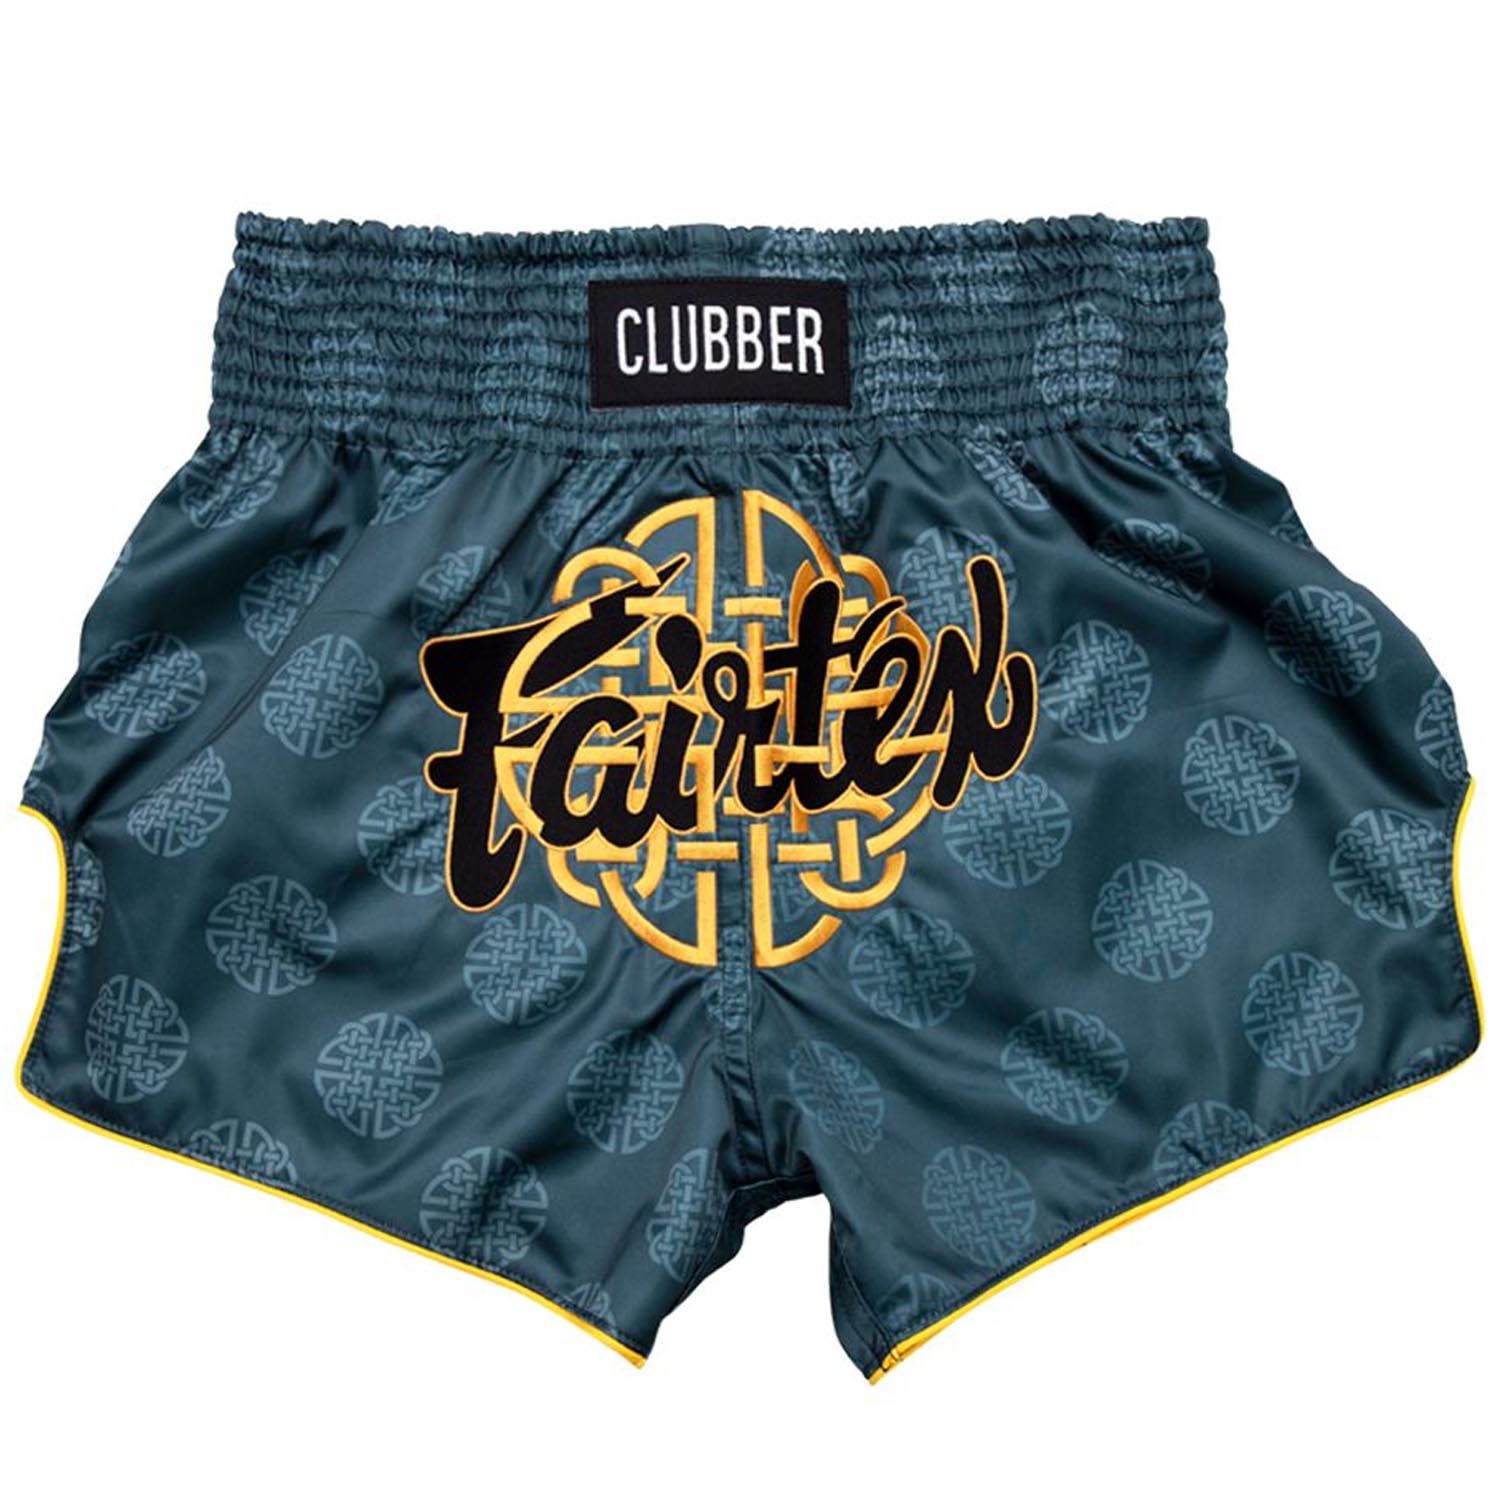 Fairtex Muay Shorts, Clubber, BS1915